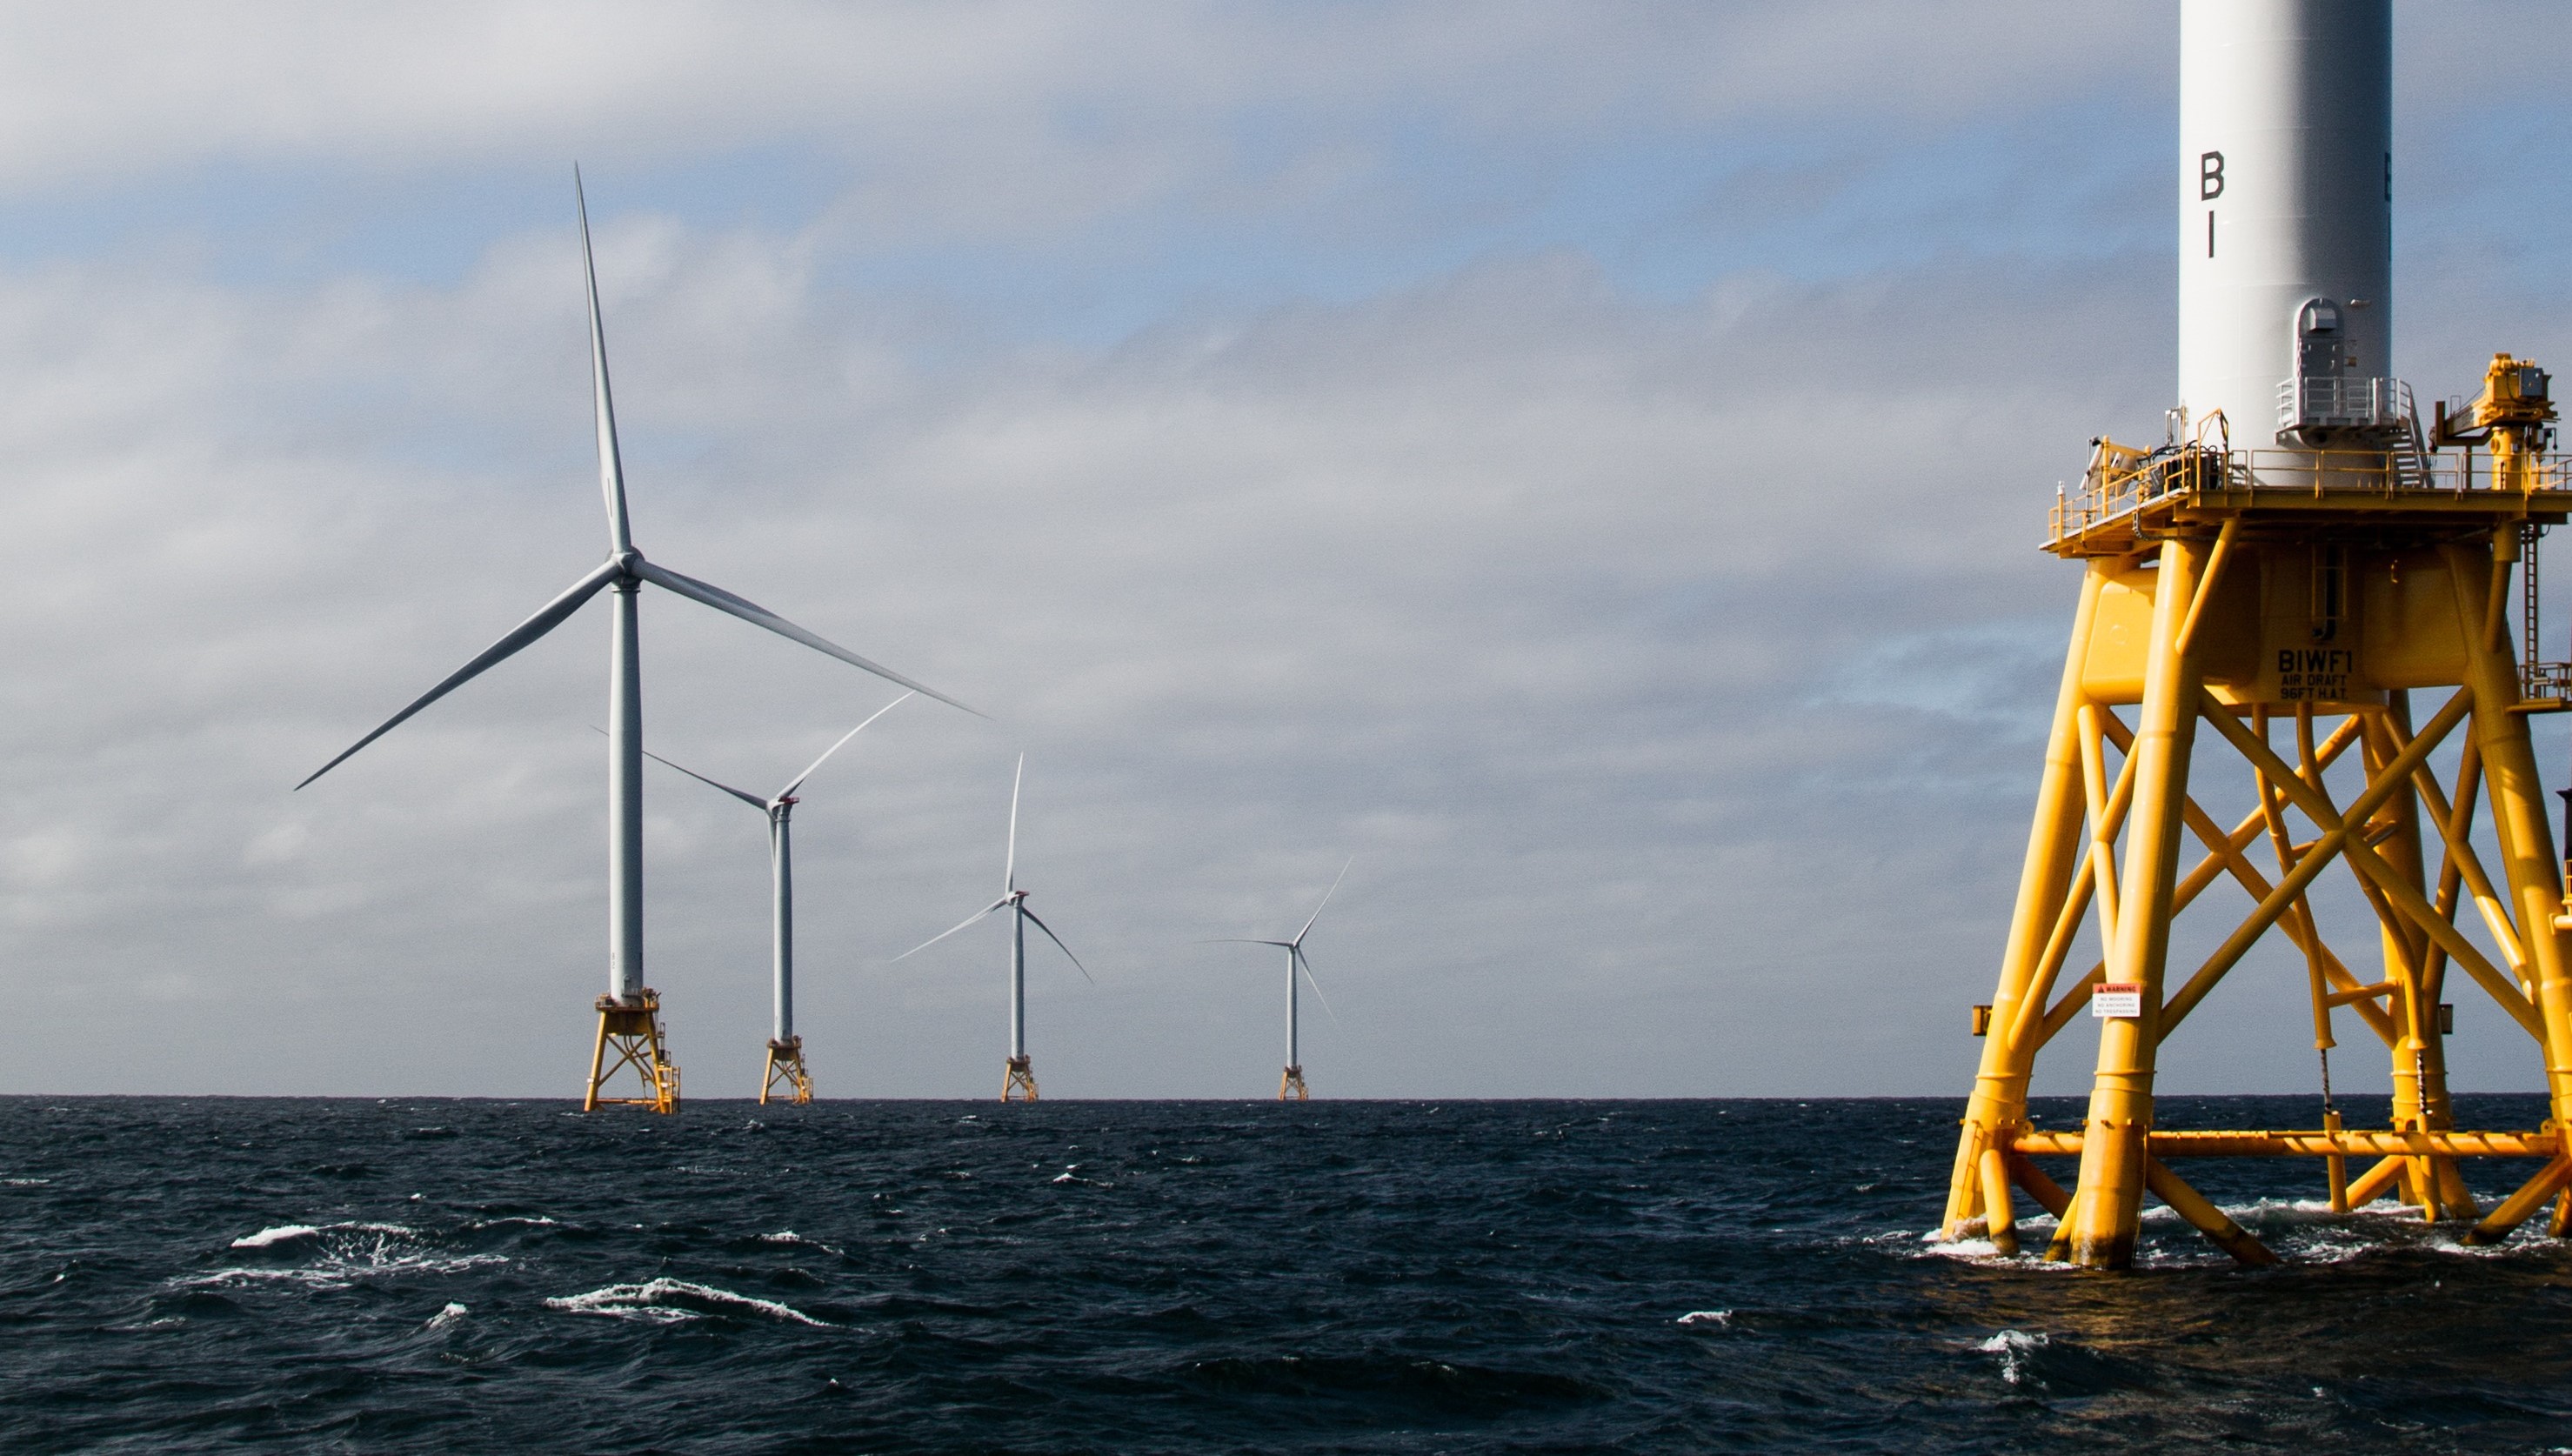 "Offshore wind turbines"